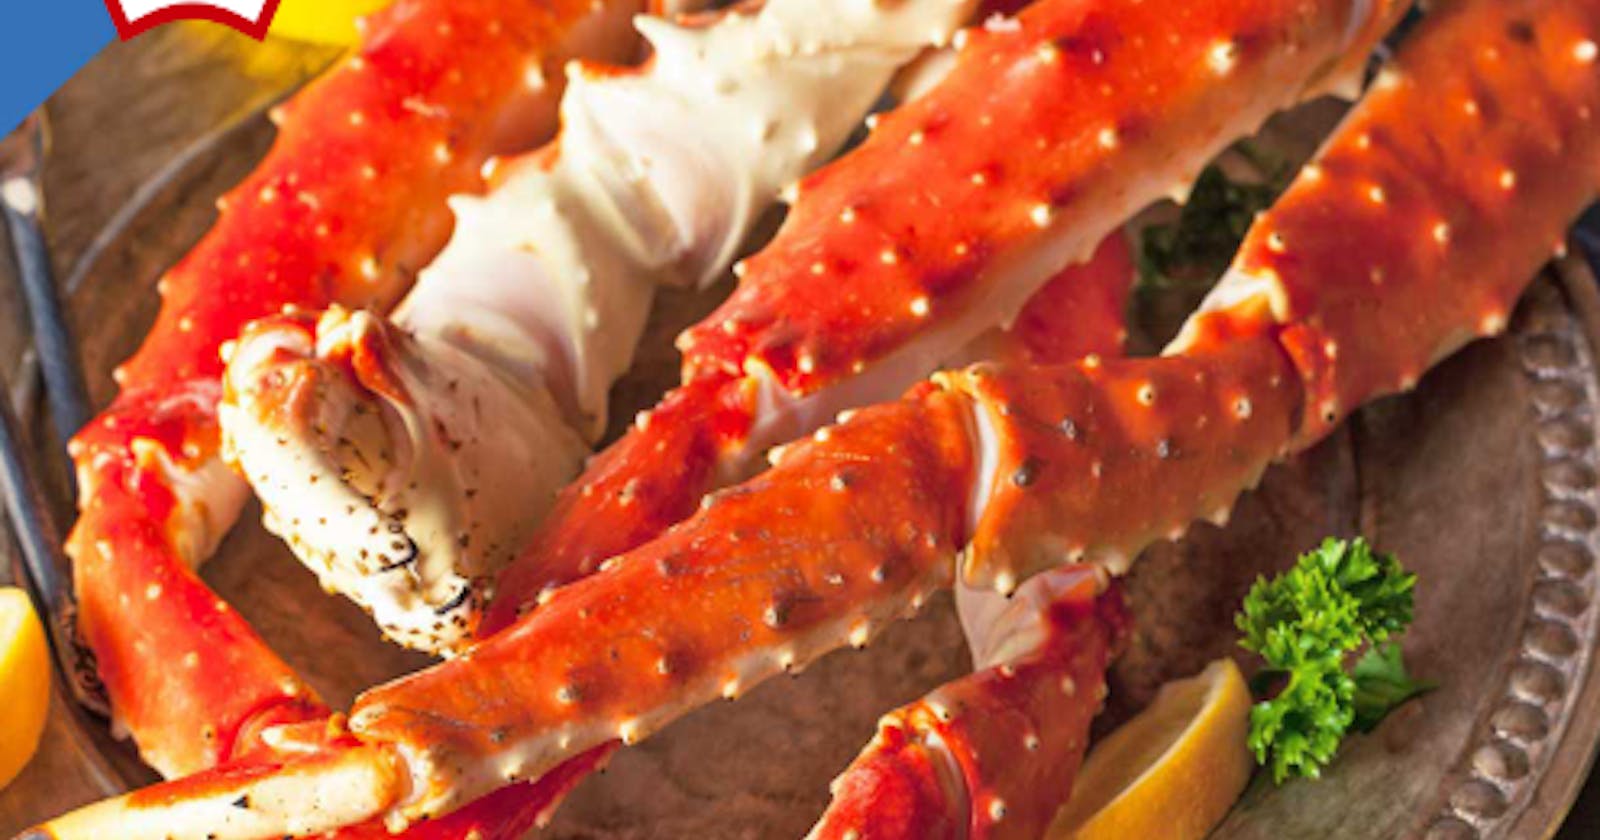 Shoespie Crab Reviews: Legit or Hoax?